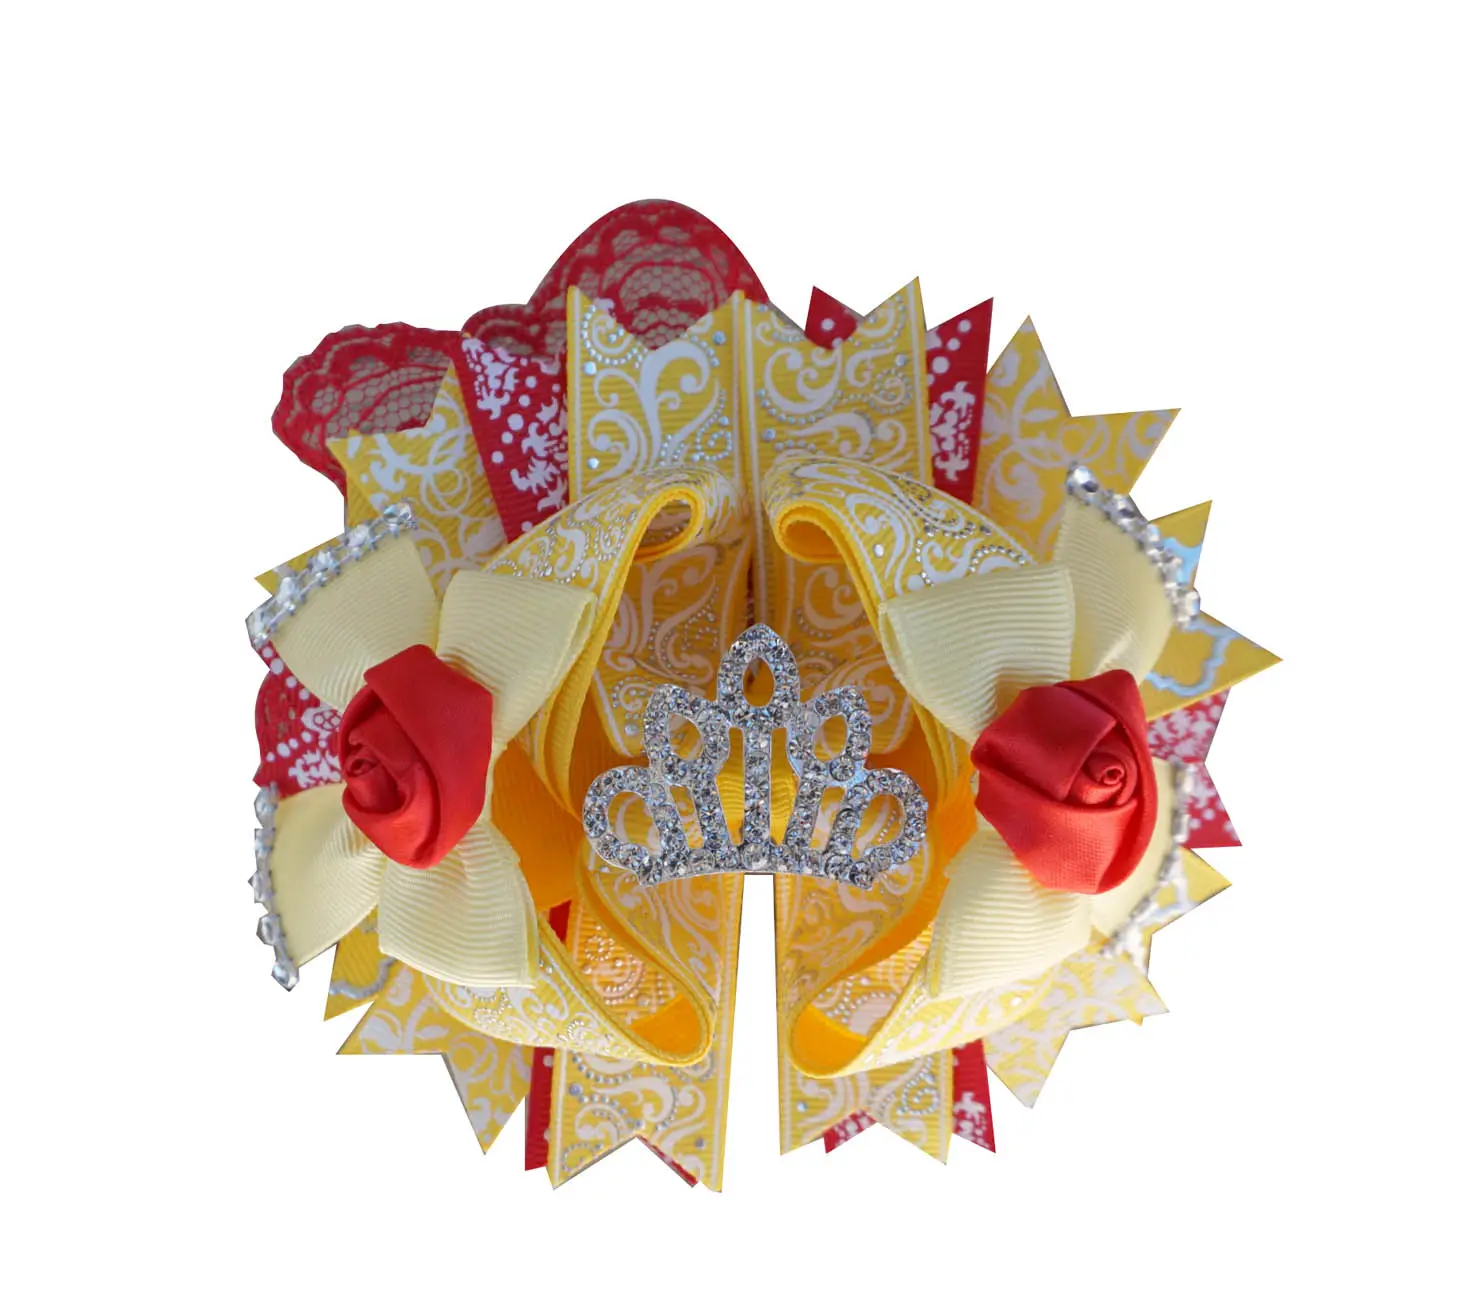 Diadema de princesa inspirada para el pelo para niña, Diadema con lazo de plumas amarillas y rojas, accesorios para el cabello para niña